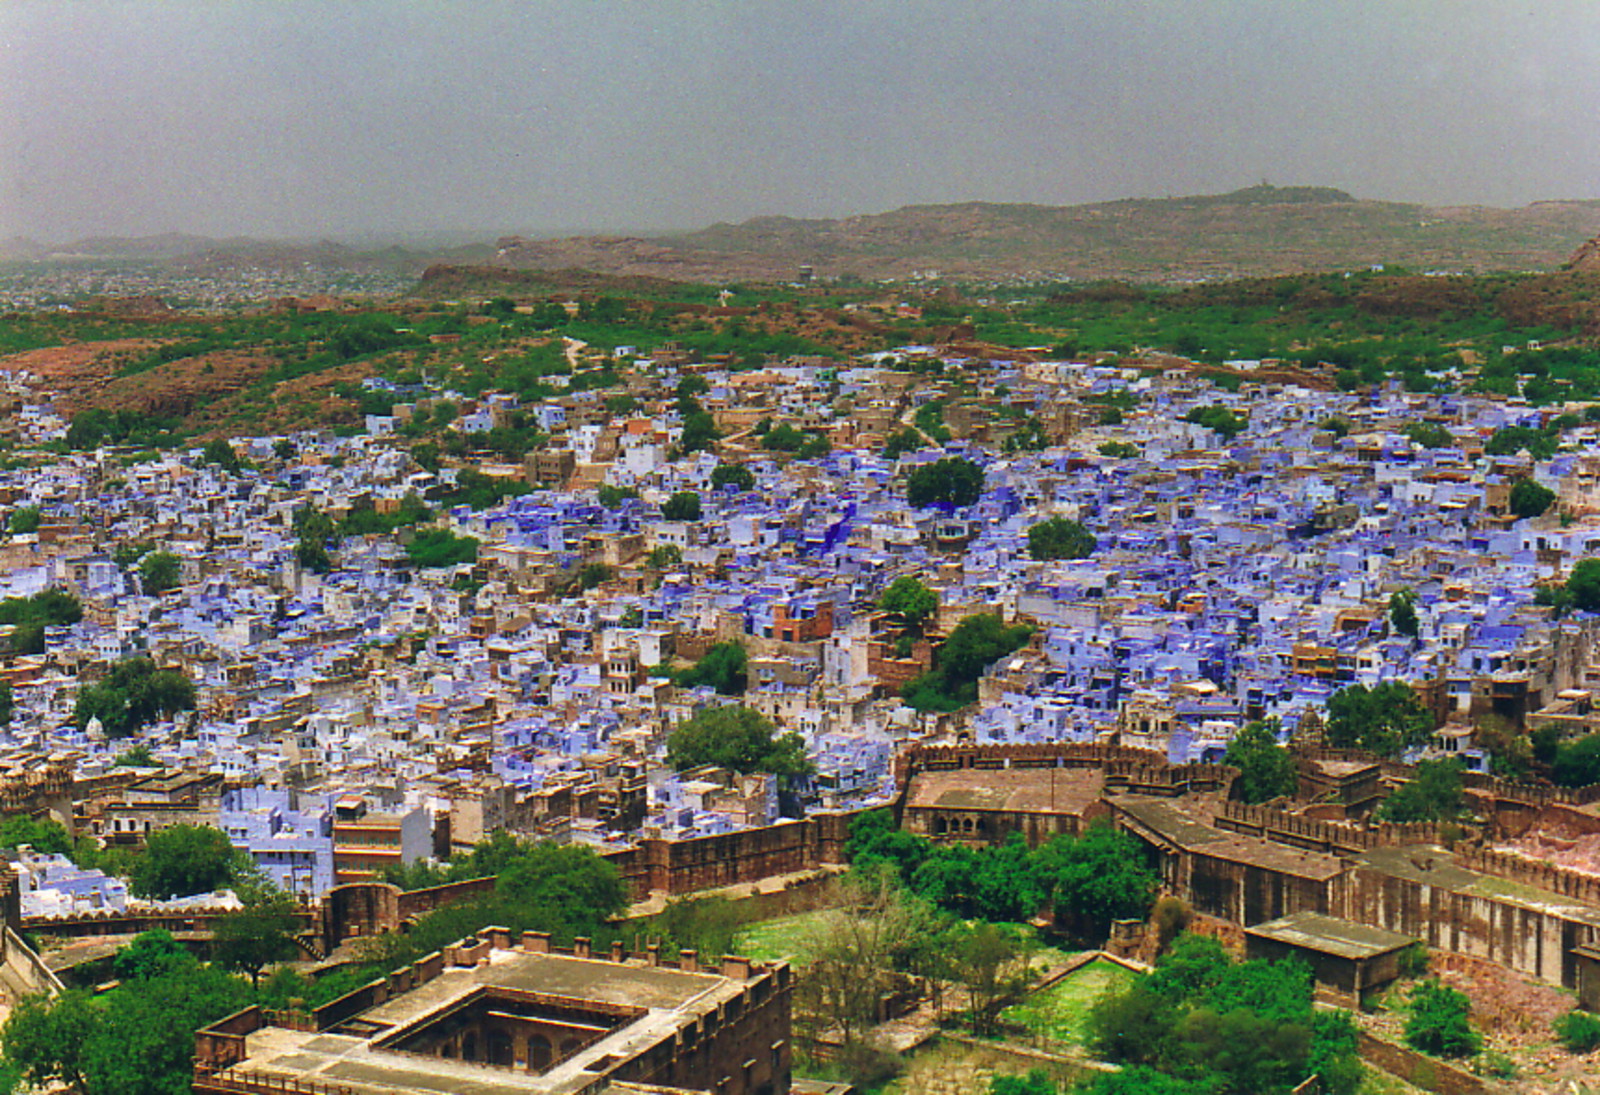 The blue houses of Jodhpur